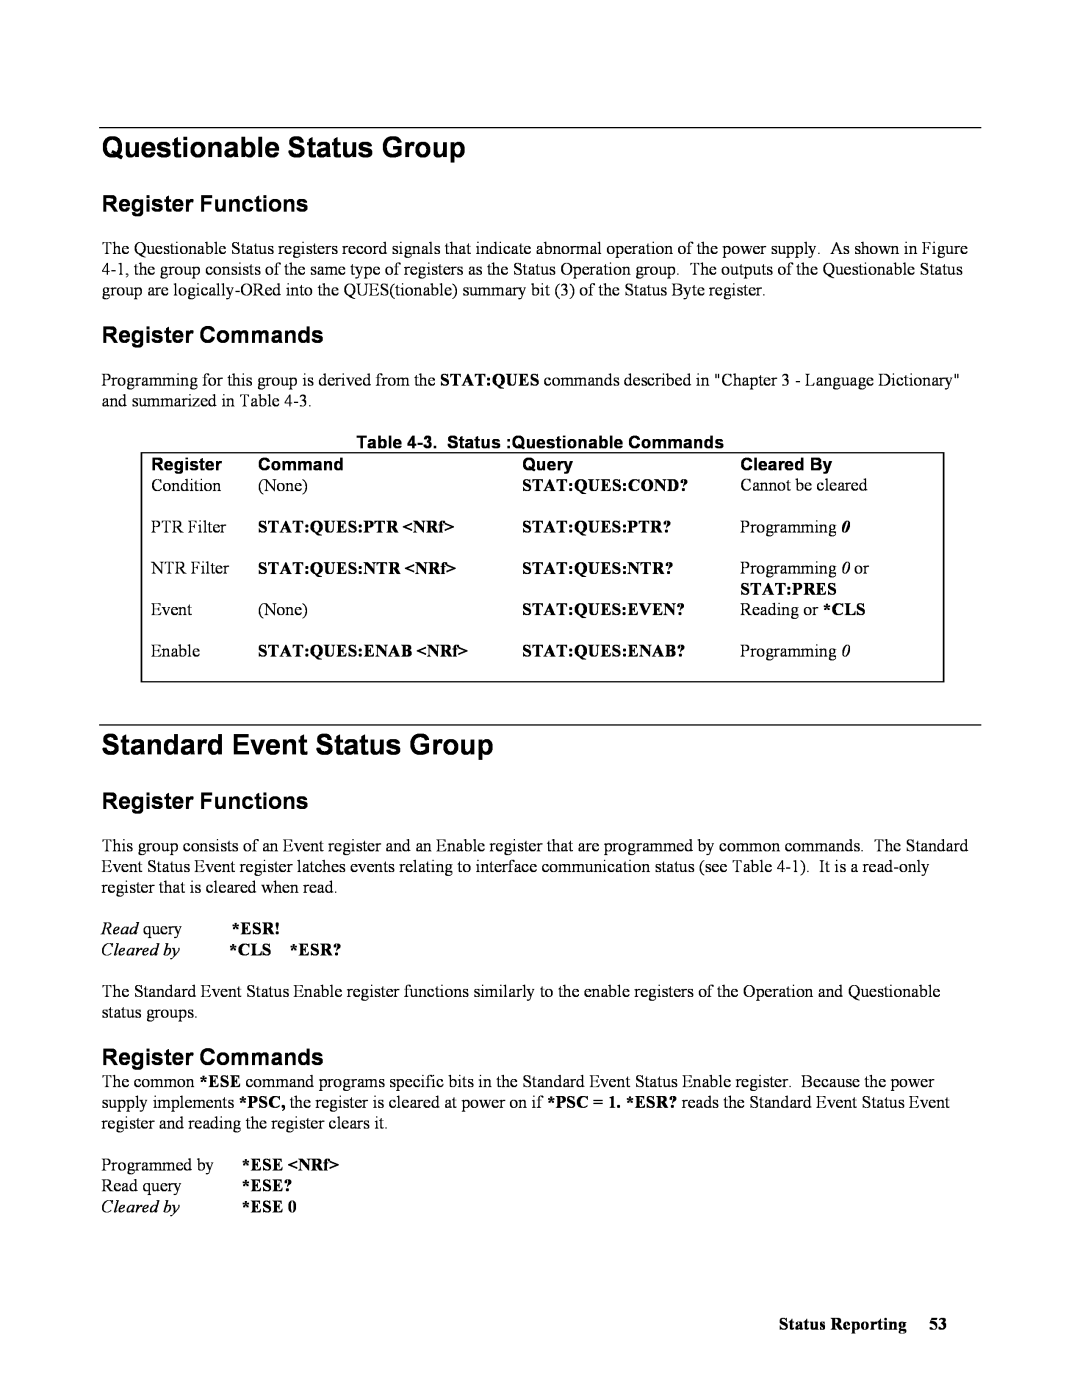 Agilent Technologies 664xA Questionable Status Group, Standard Event Status Group, Register Functions, Register Commands 